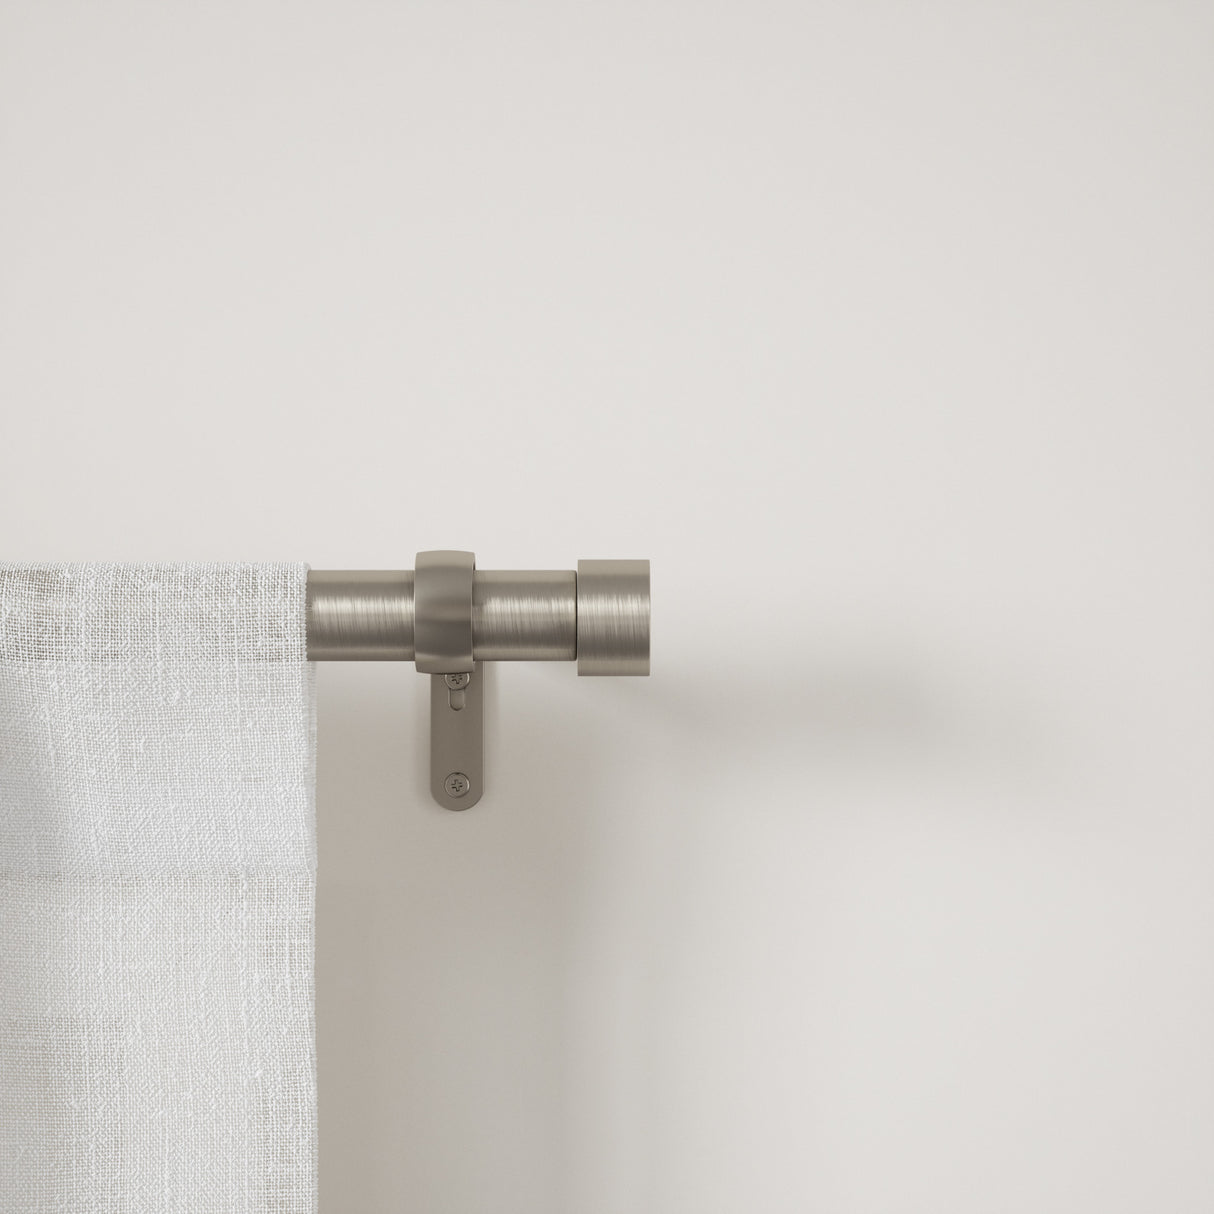 Single Curtain Rods | color: Nickel | size: 66-120" (168-305 cm) | diameter: 1" (2.5 cm) | Hover